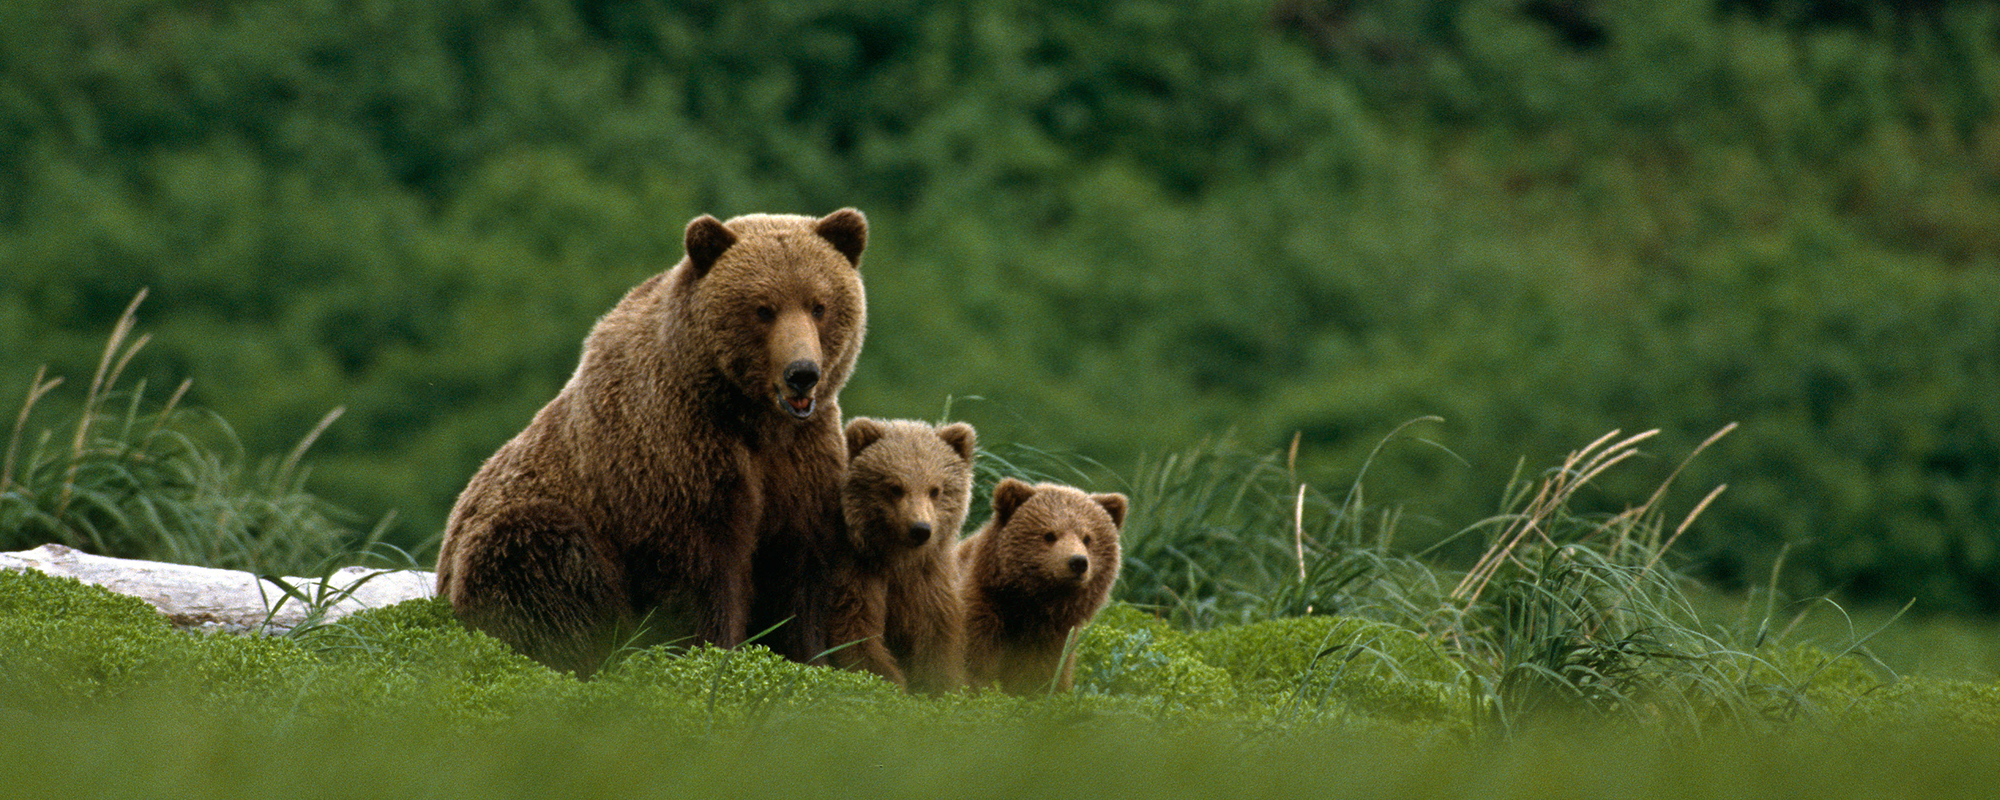 grizzly-bear-312625.jpg